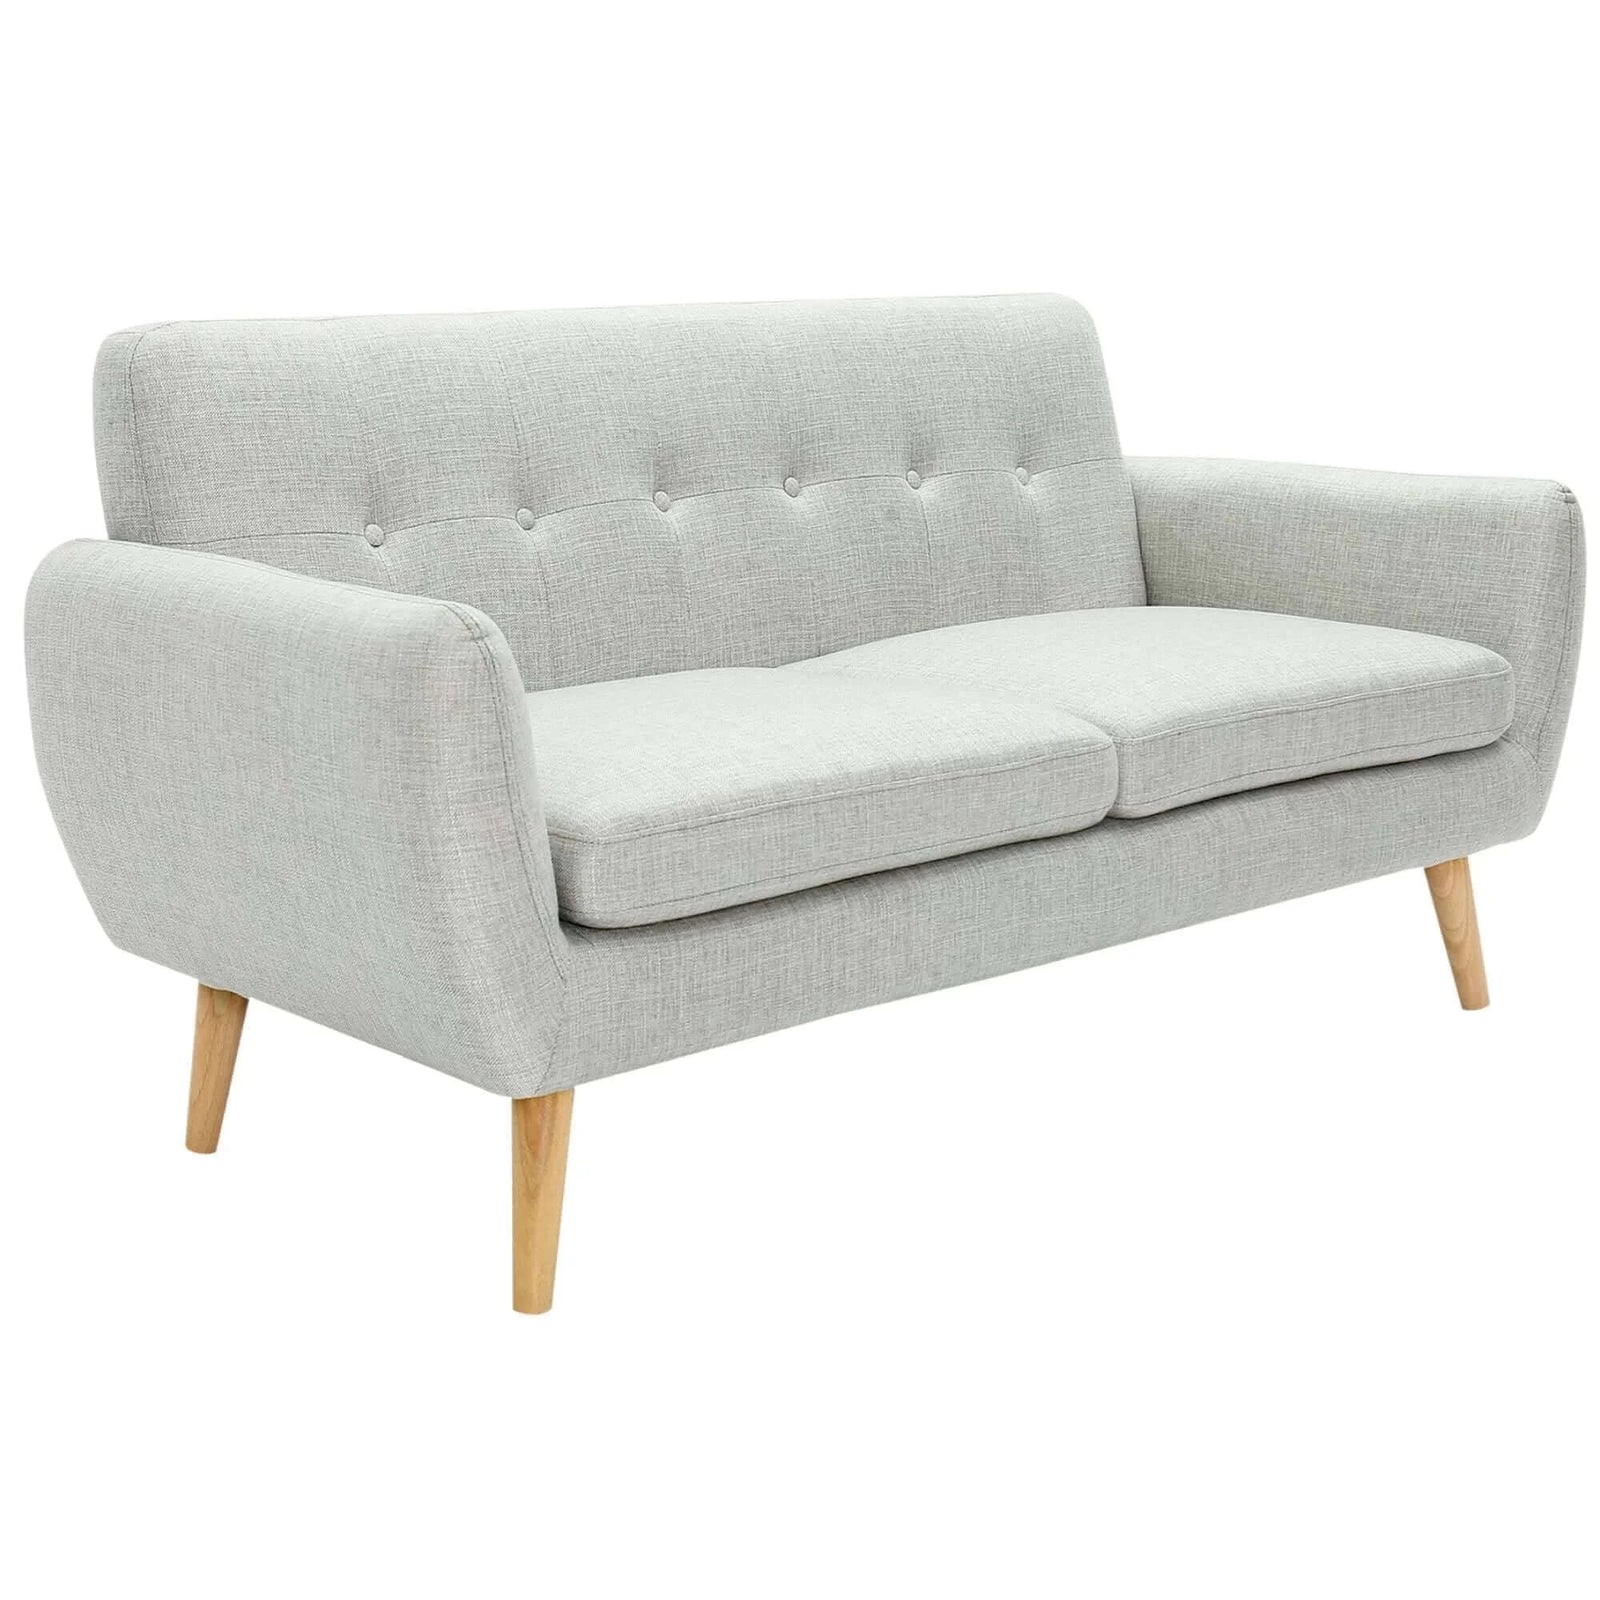 Buy dane 3 seater fabric upholstered sofa lounge couch - light grey - upinteriors-Upinteriors